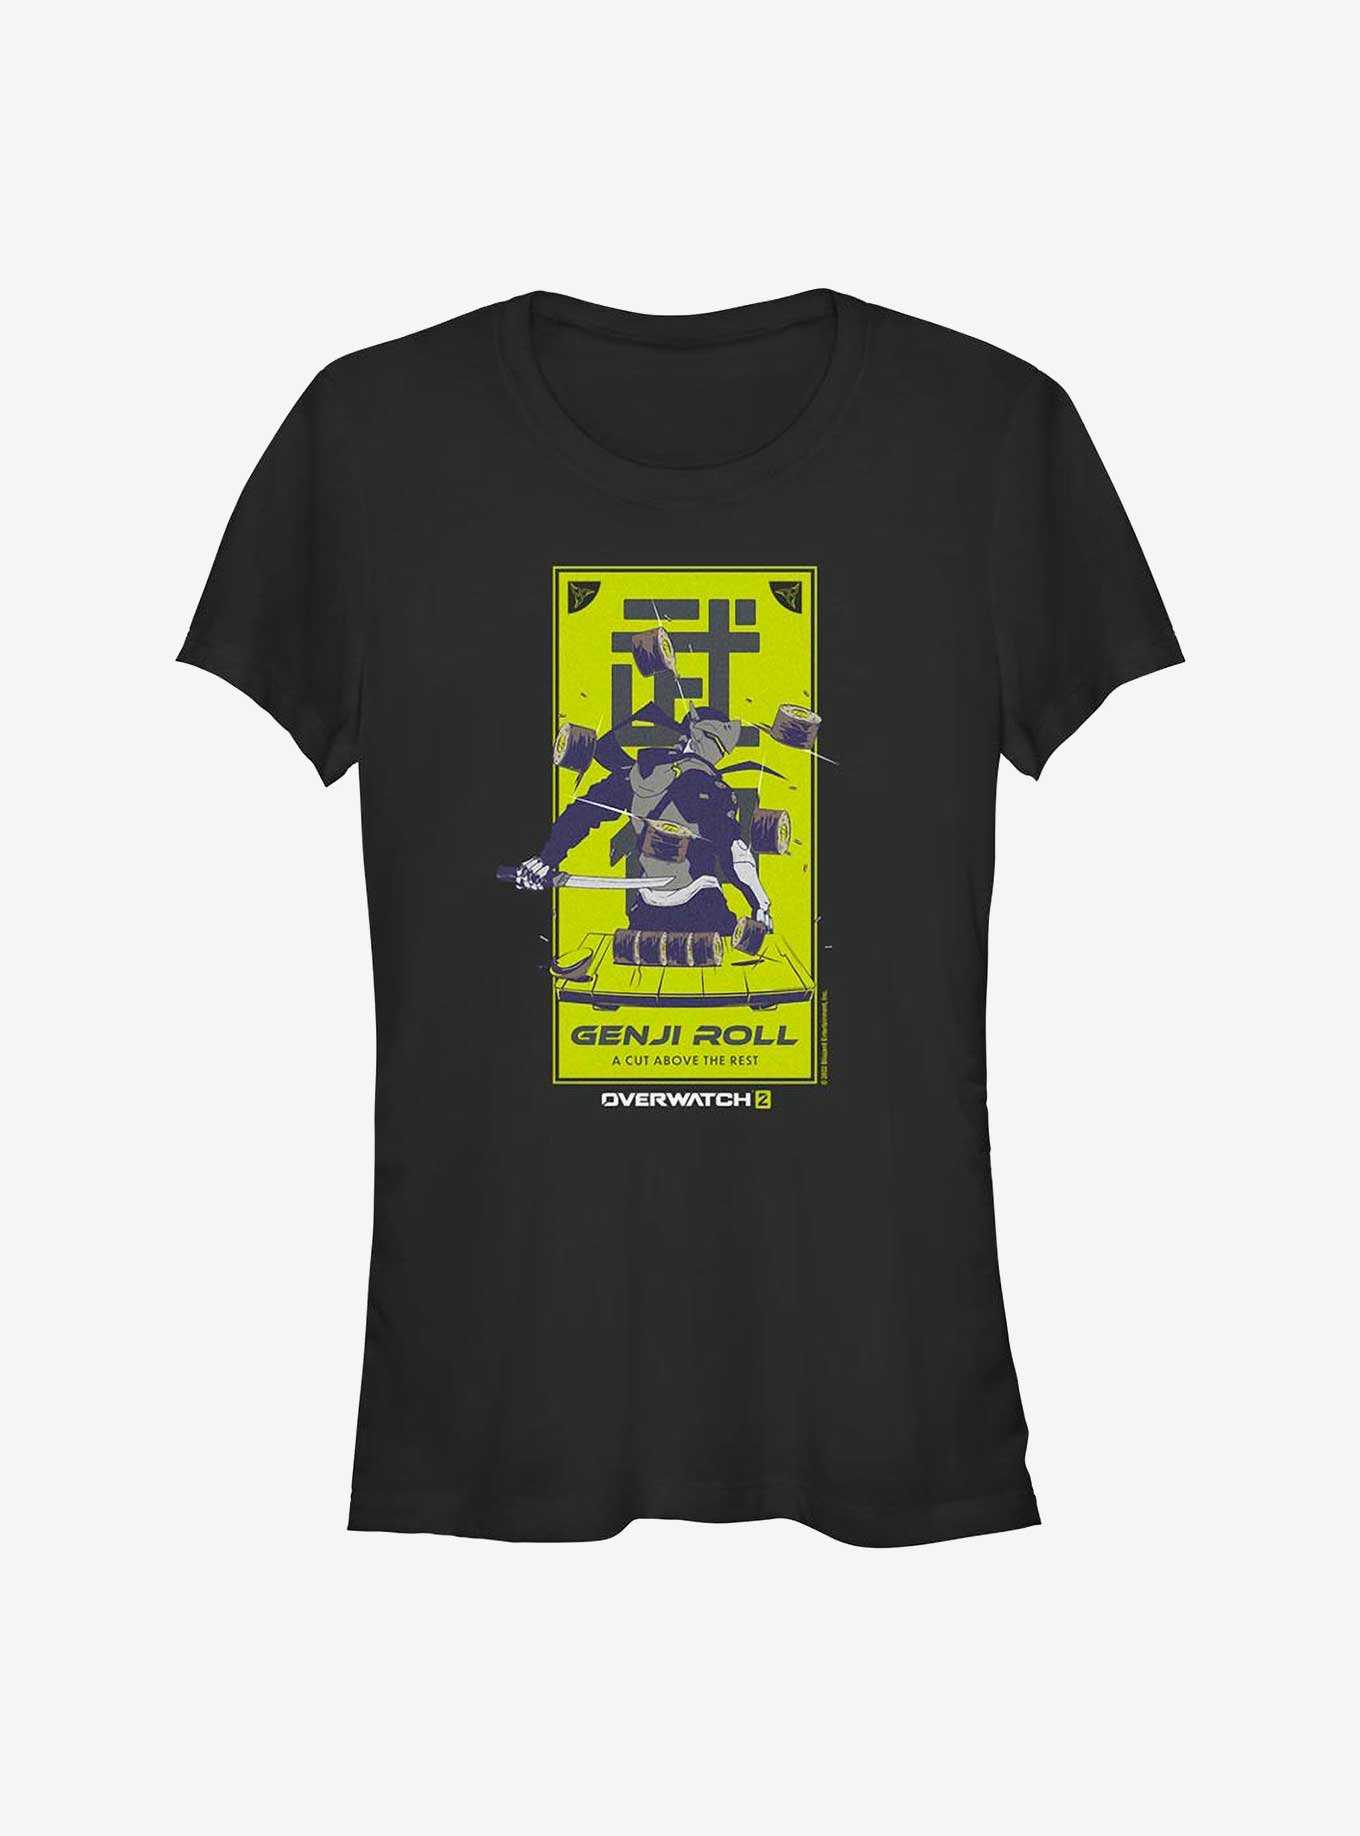 Overwatch 2 Genji Roll Poster Girls T-Shirt, , hi-res